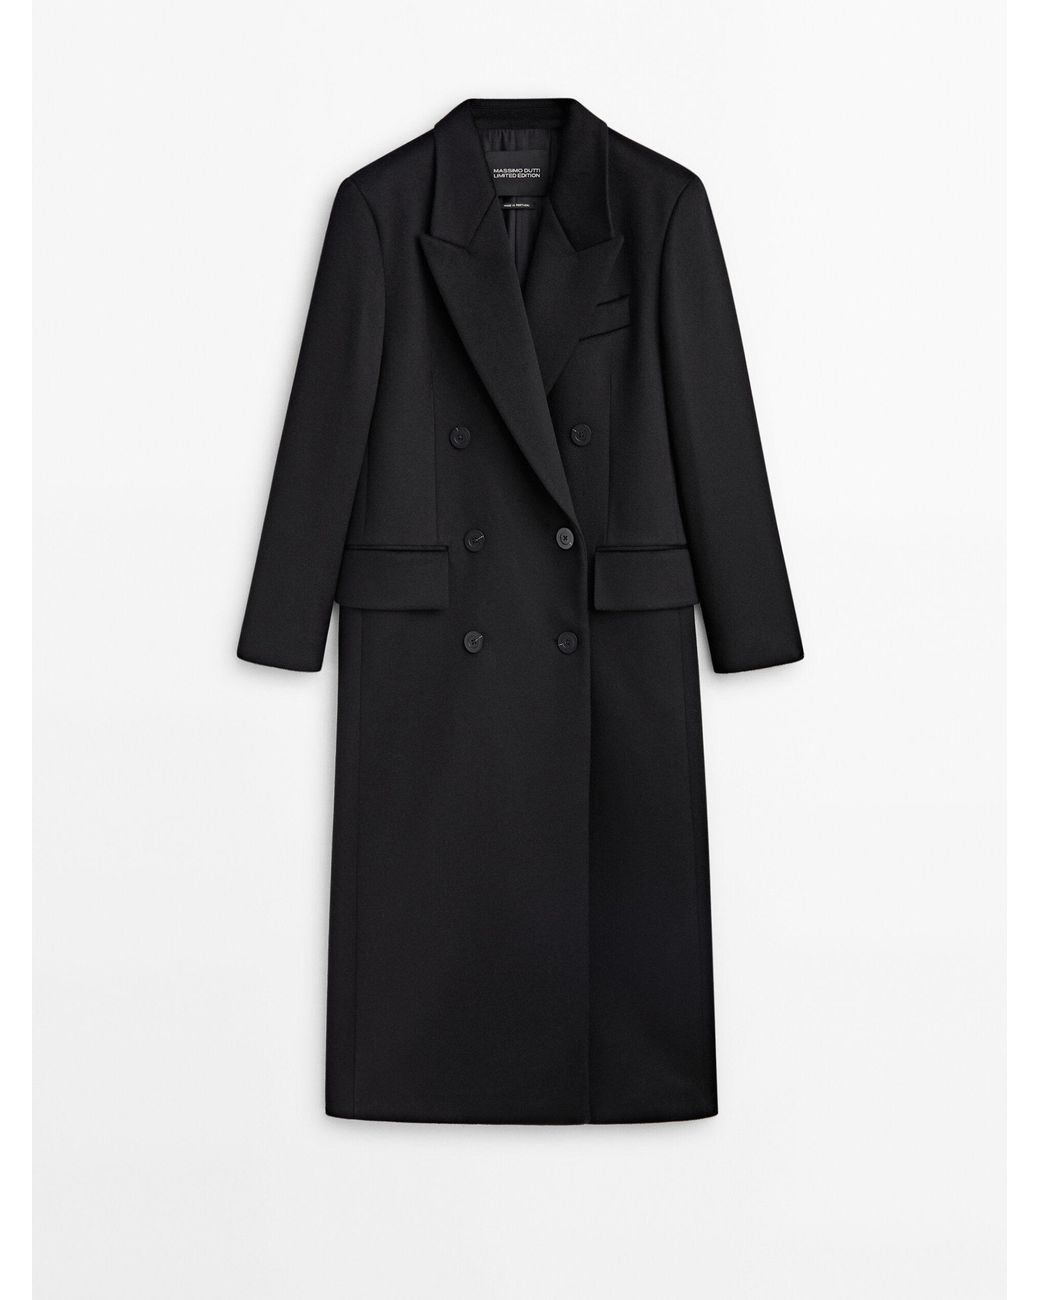 Zara - Double-Breasted High Collar Coat - Black - Women